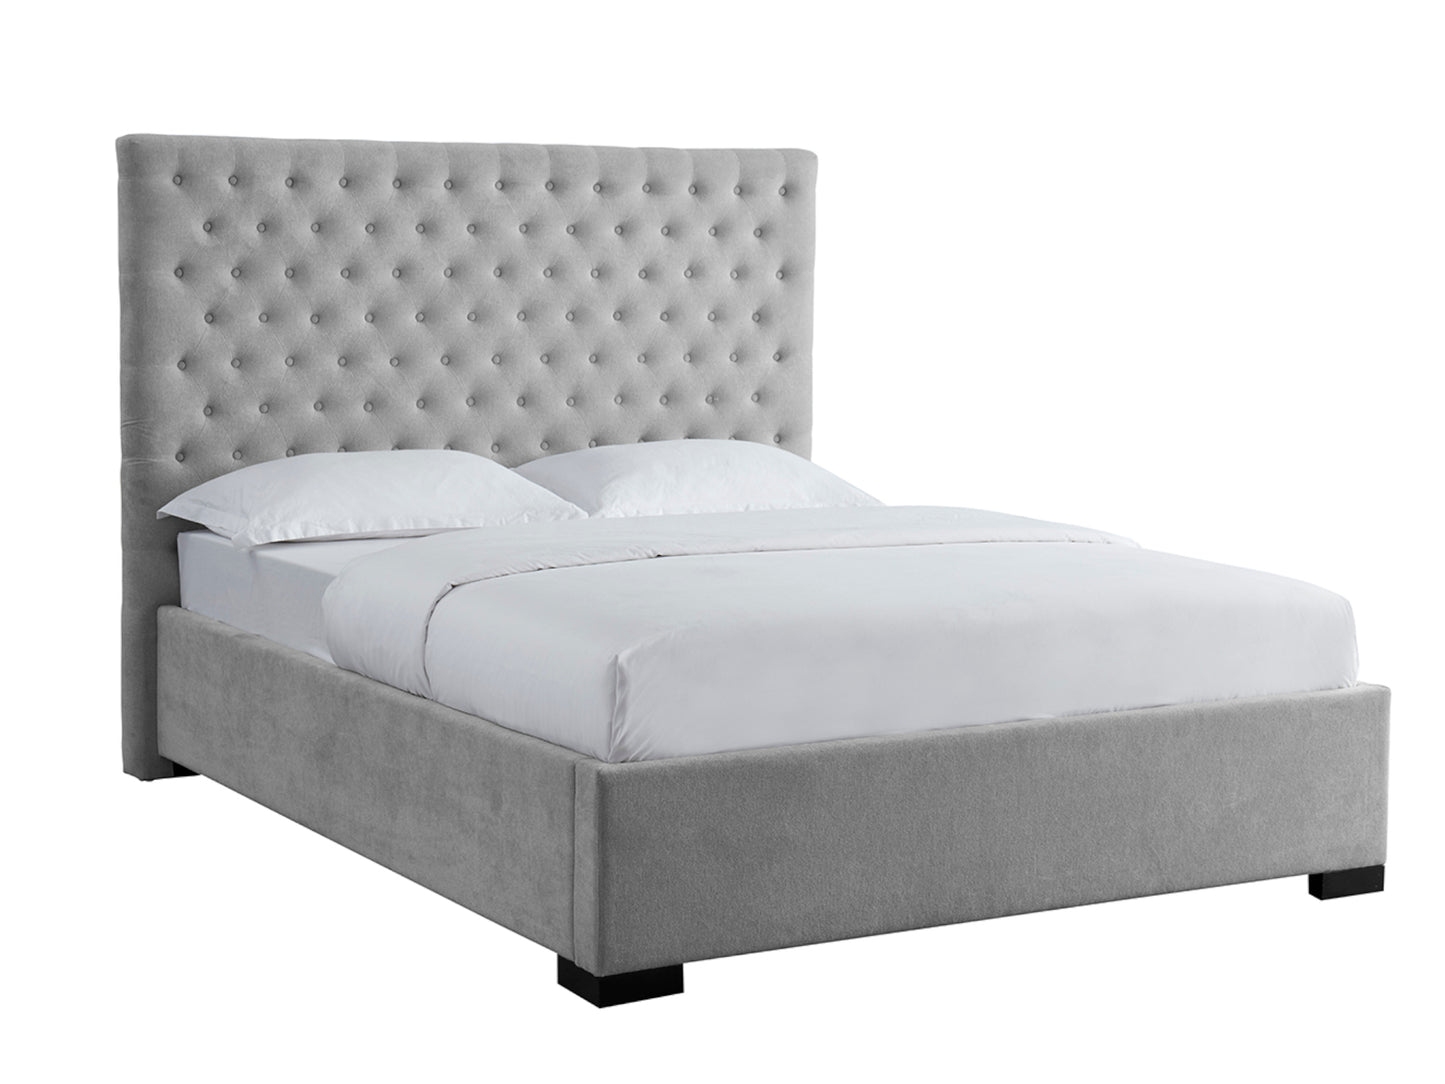 Cavendish Bed Frame in Soft Grey Velvet